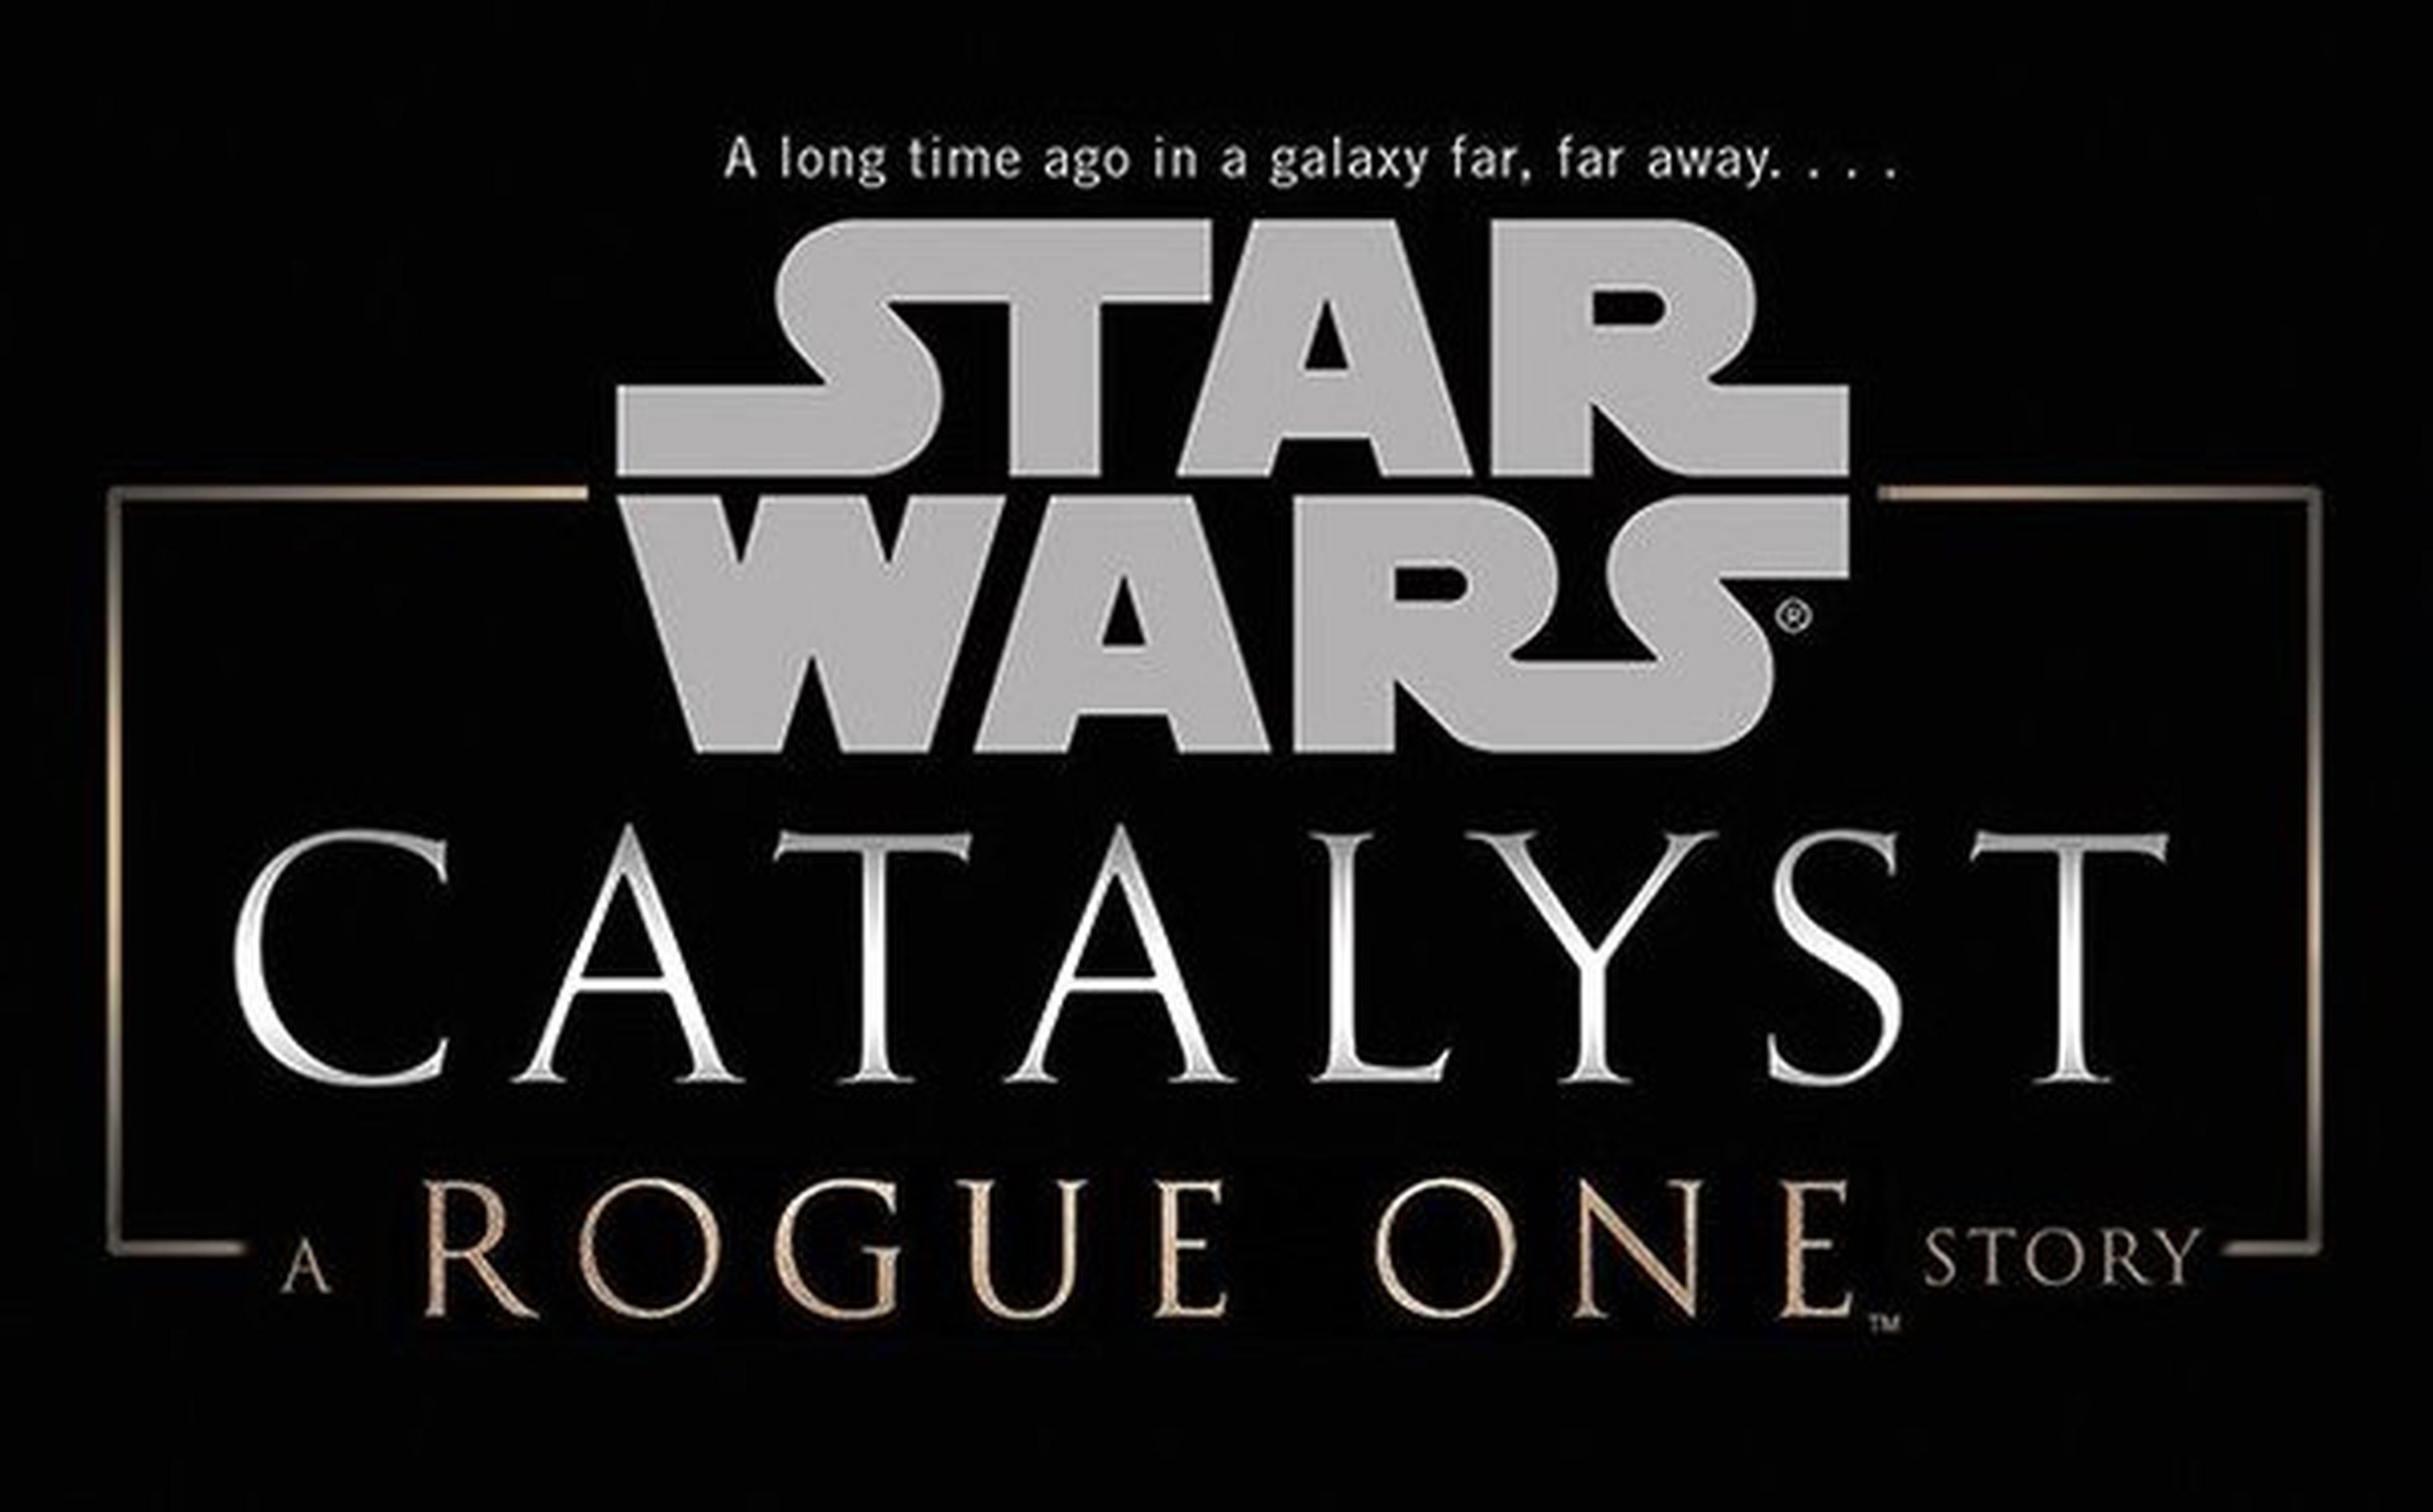 Star Wars - Rogue One. El spin off tendra serie de cómics y novela (Actualizado)